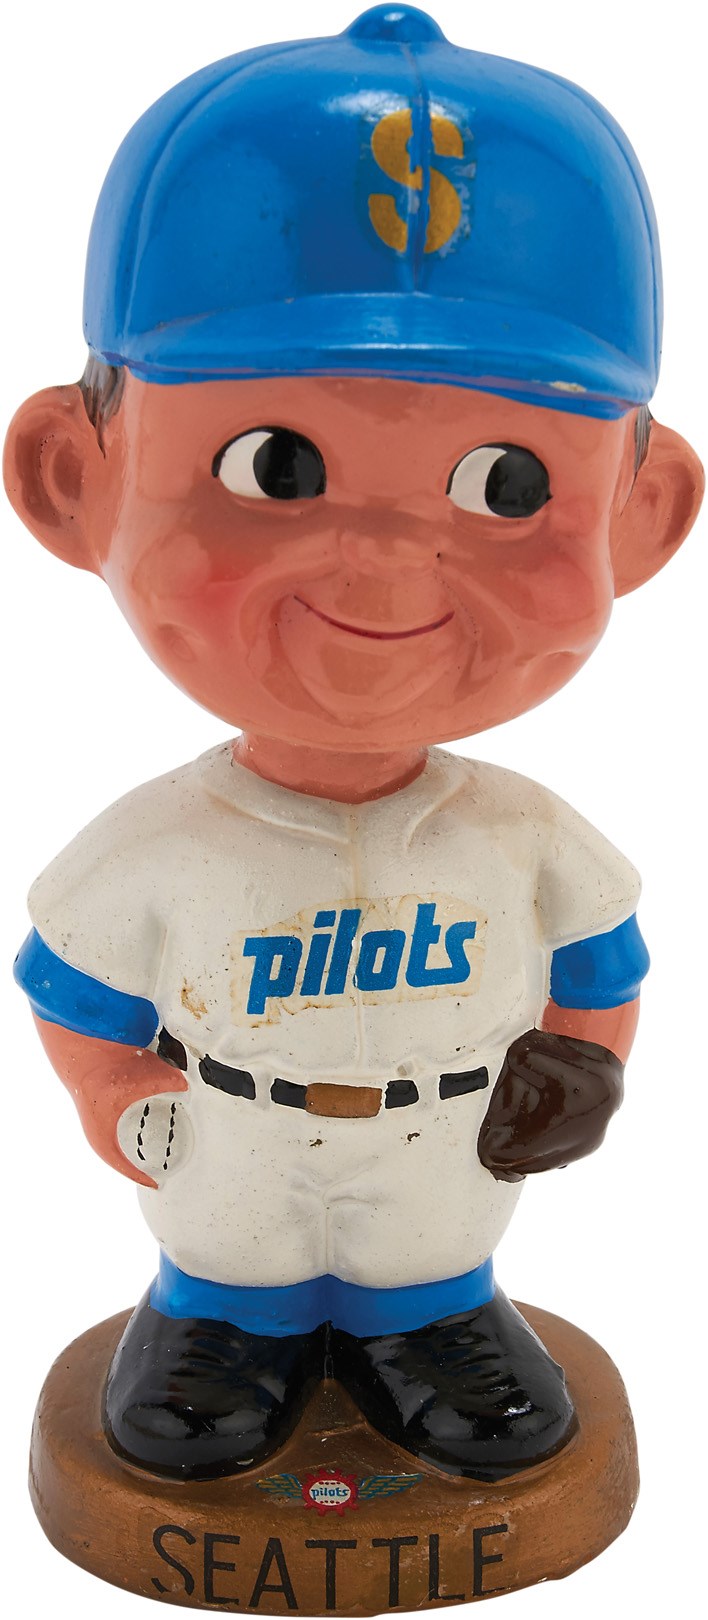 Baseball Memorabilia - 1969 Seattle Pilots Bobbin' Head